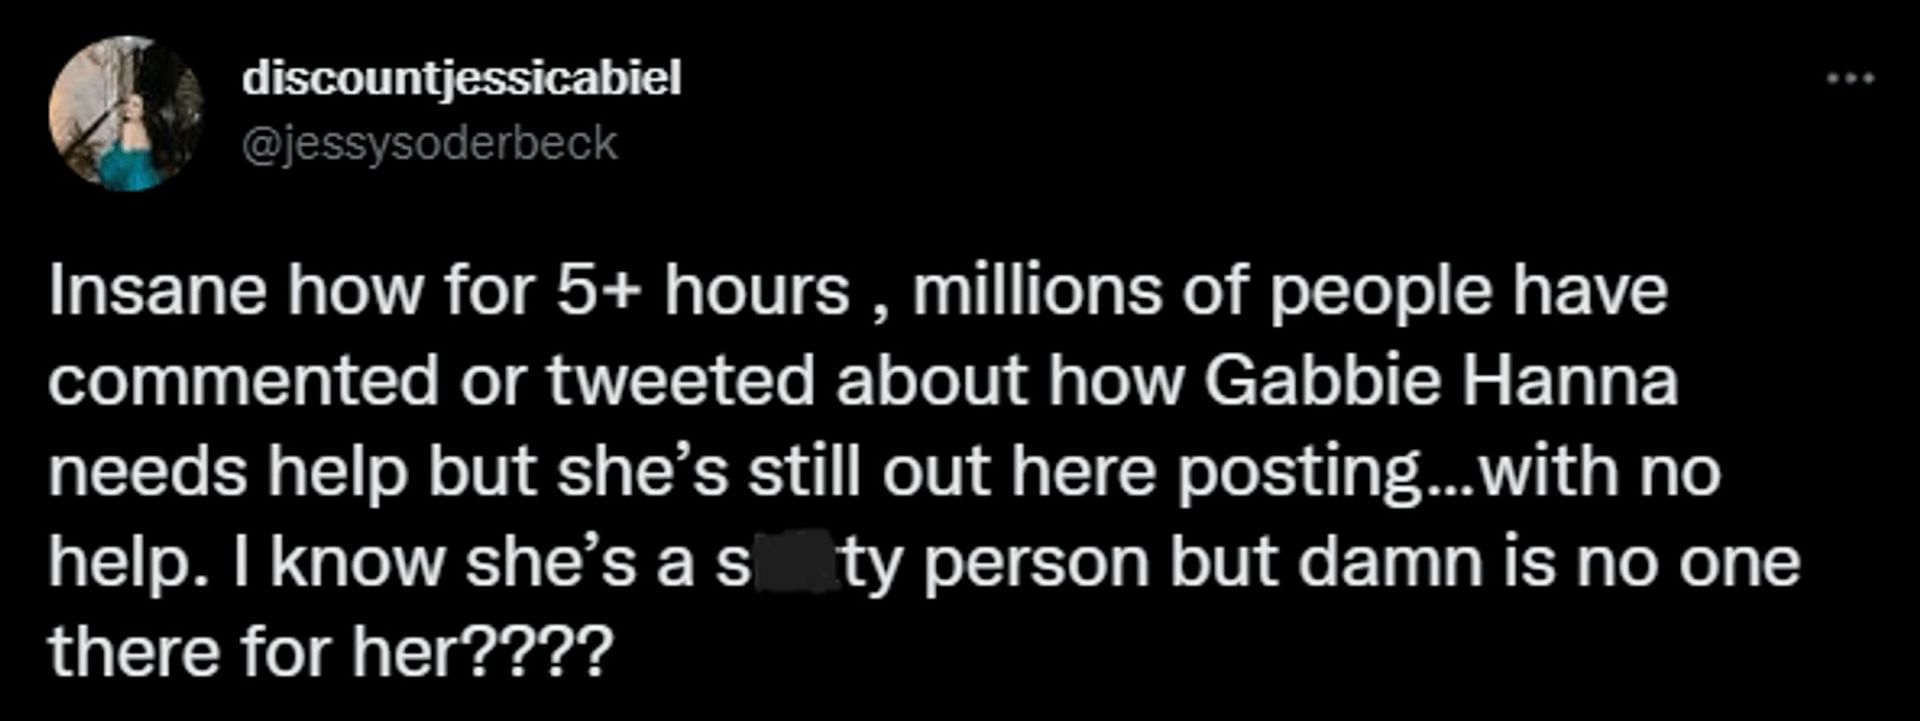 Netizen reacts to Gabbie Hanna's recent livestream (Image via Twitter)